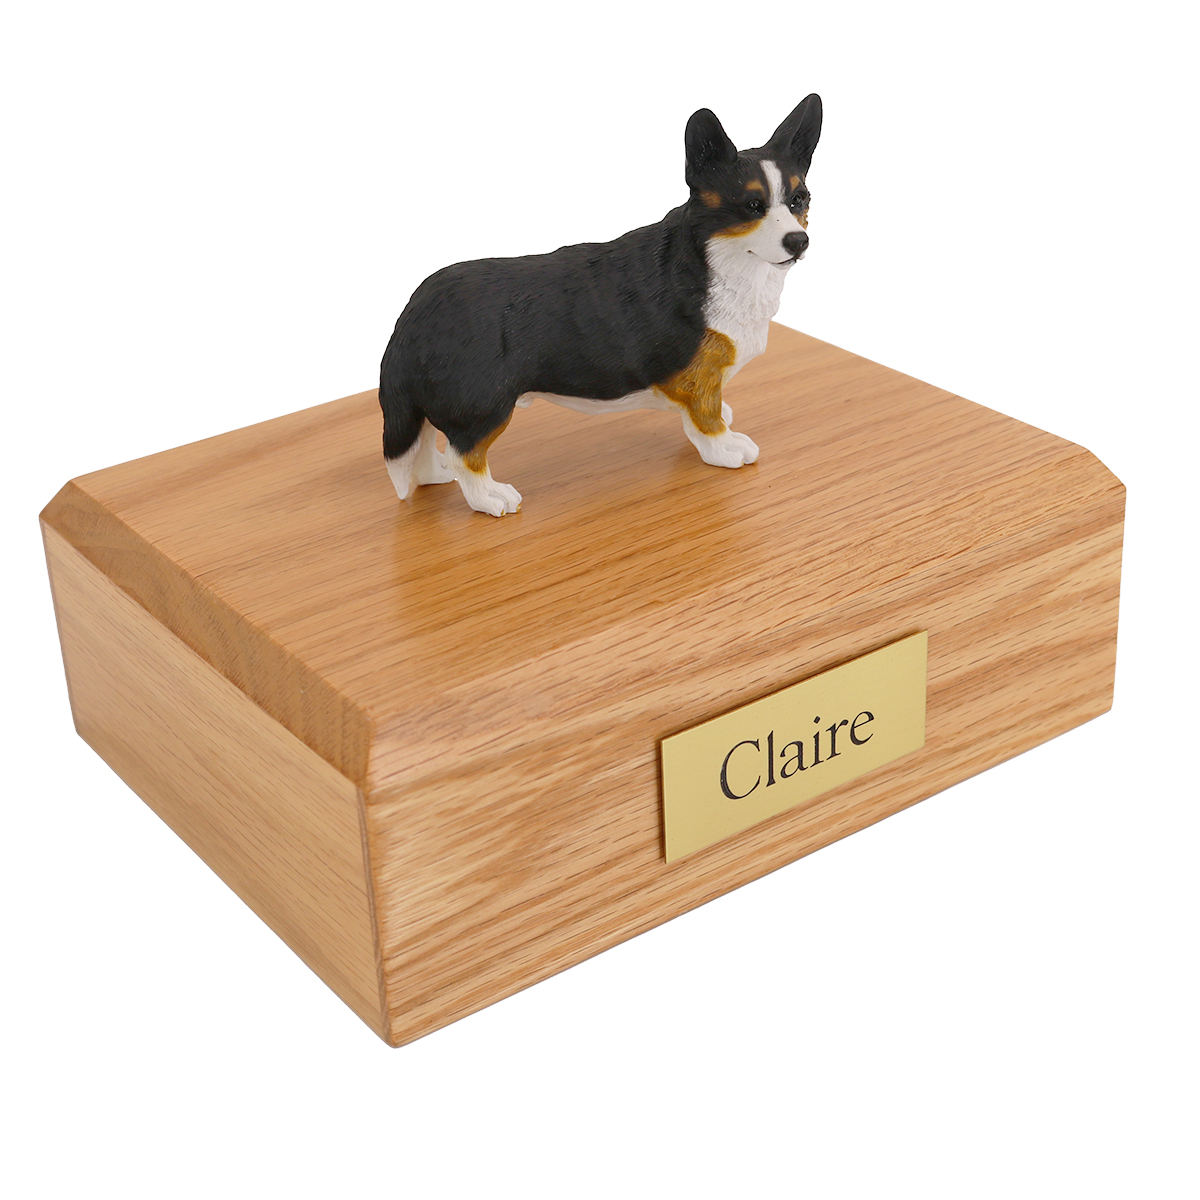 Dog, Welsh Corgi, Cardigan - Figurine Urn